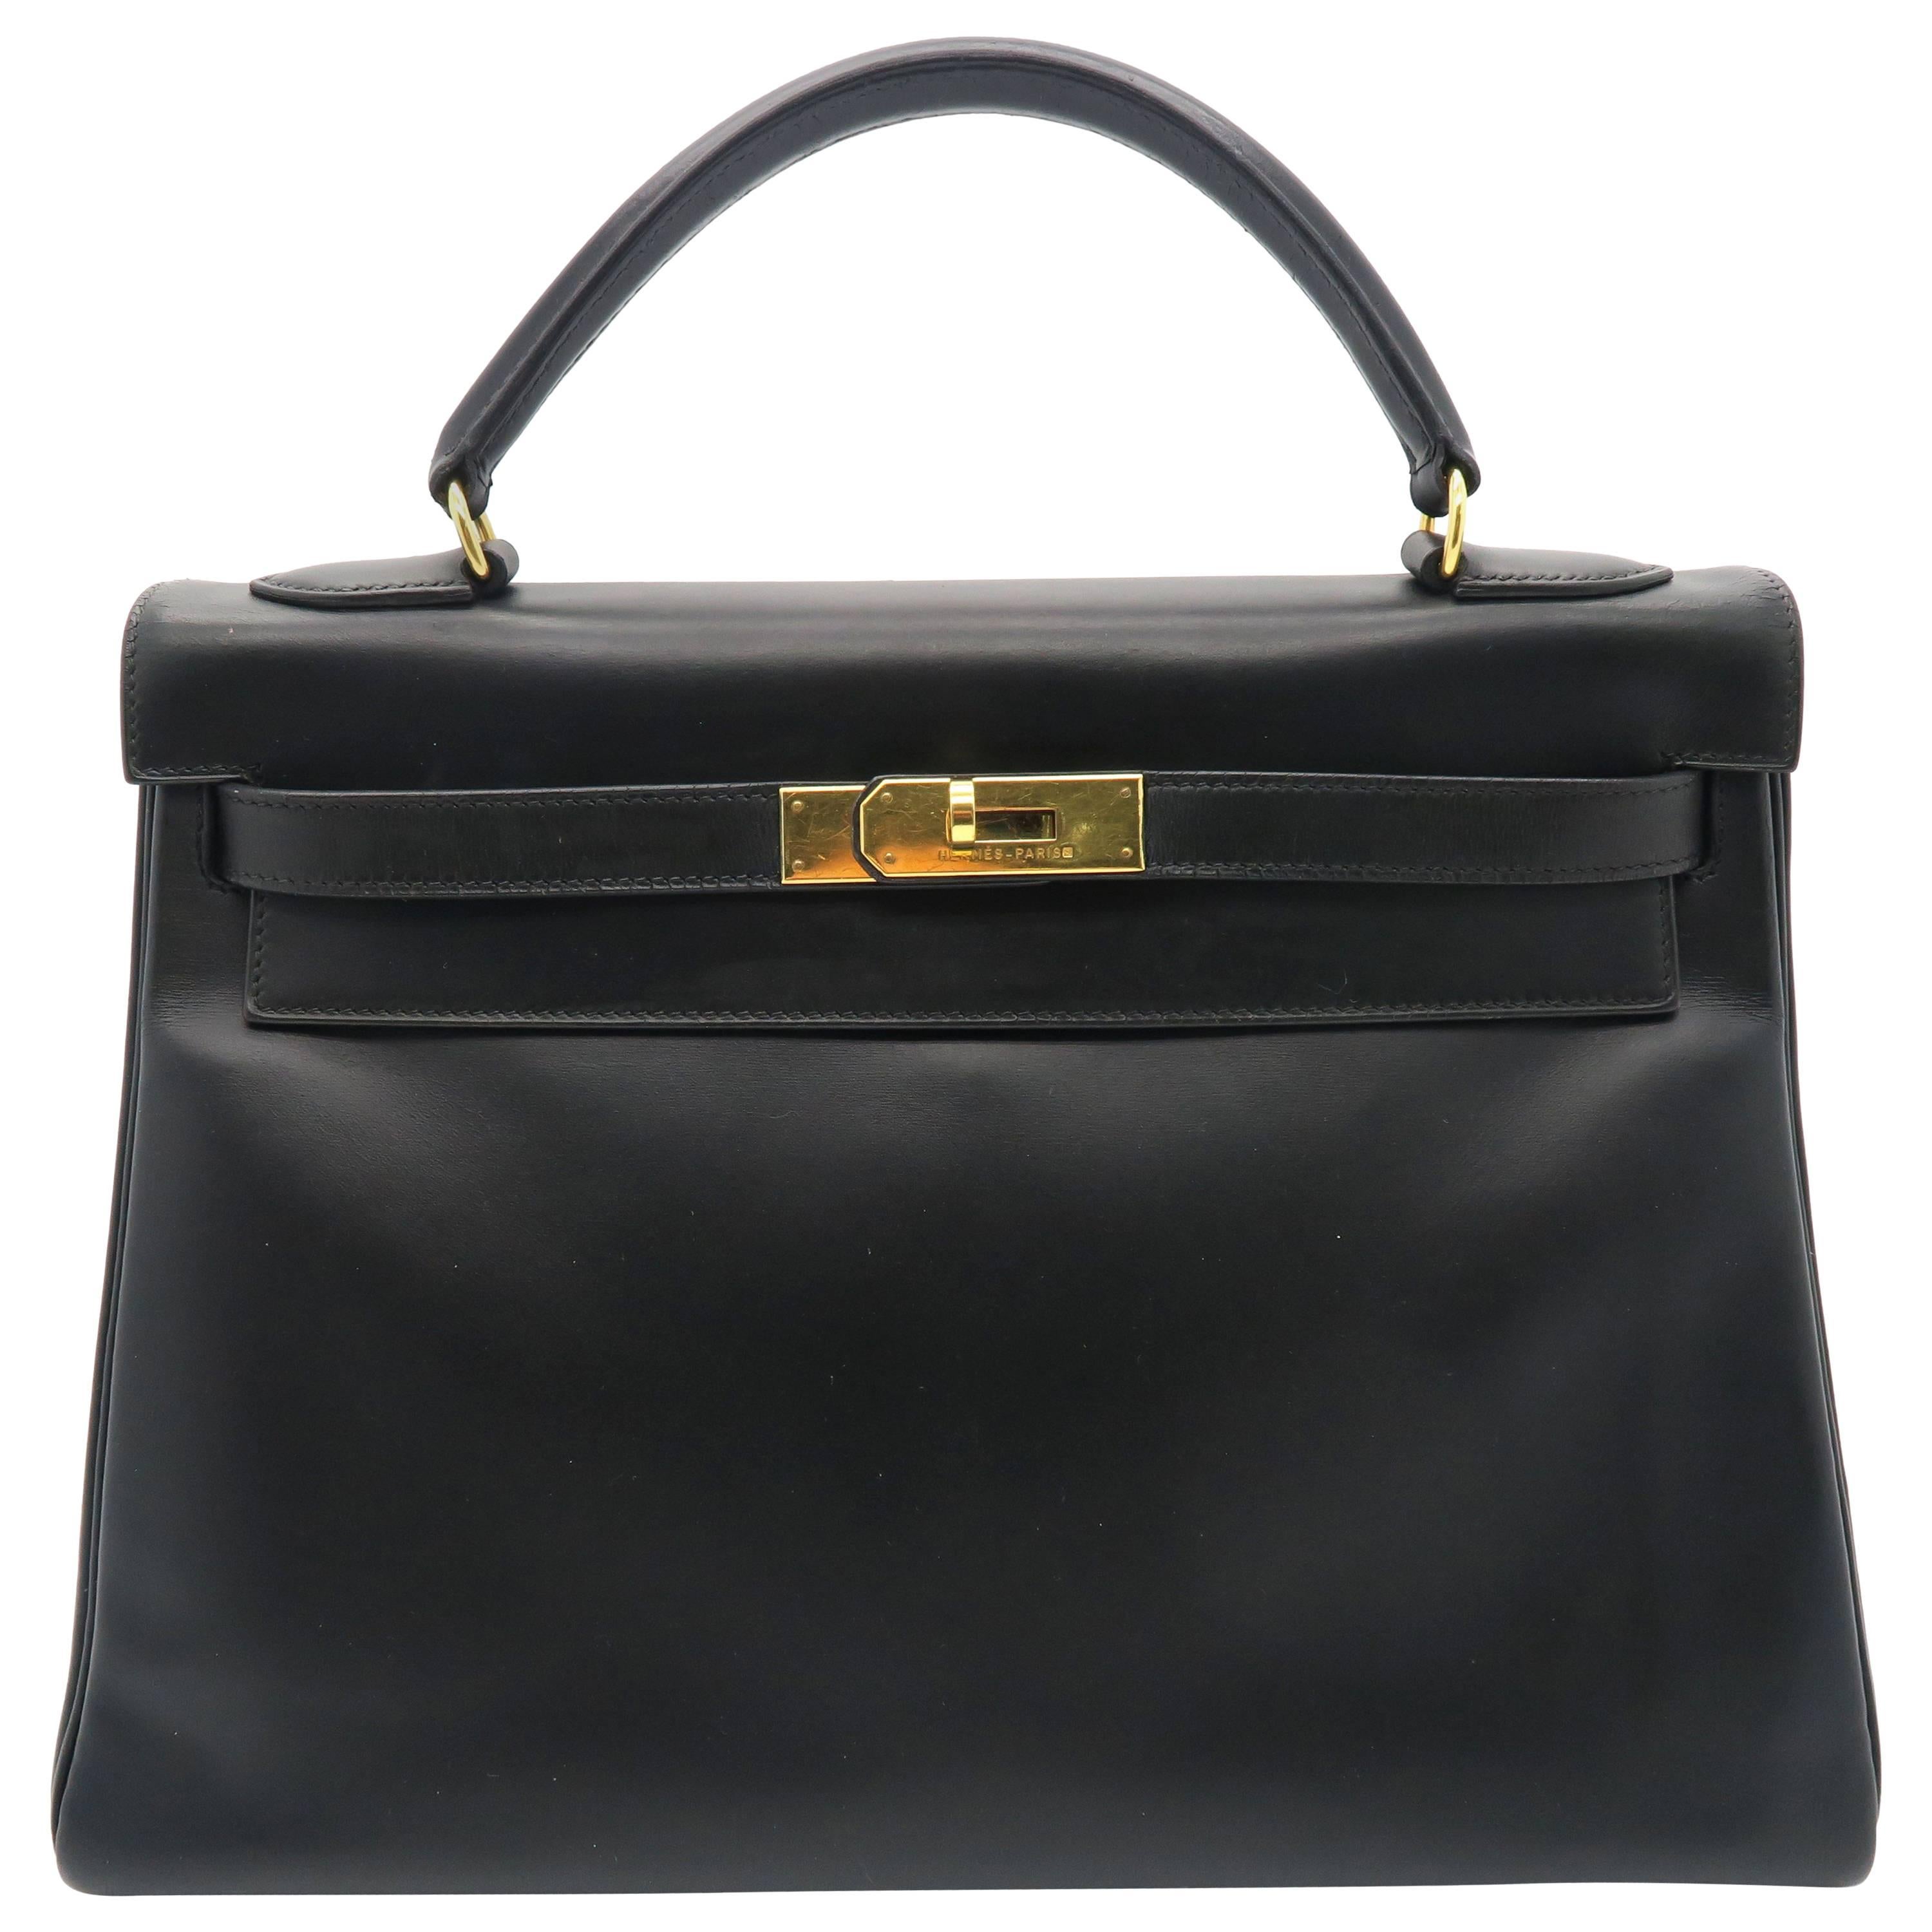 Hermes Kelly 32 Noir Box Calf Leather GHW Top Handle Bag